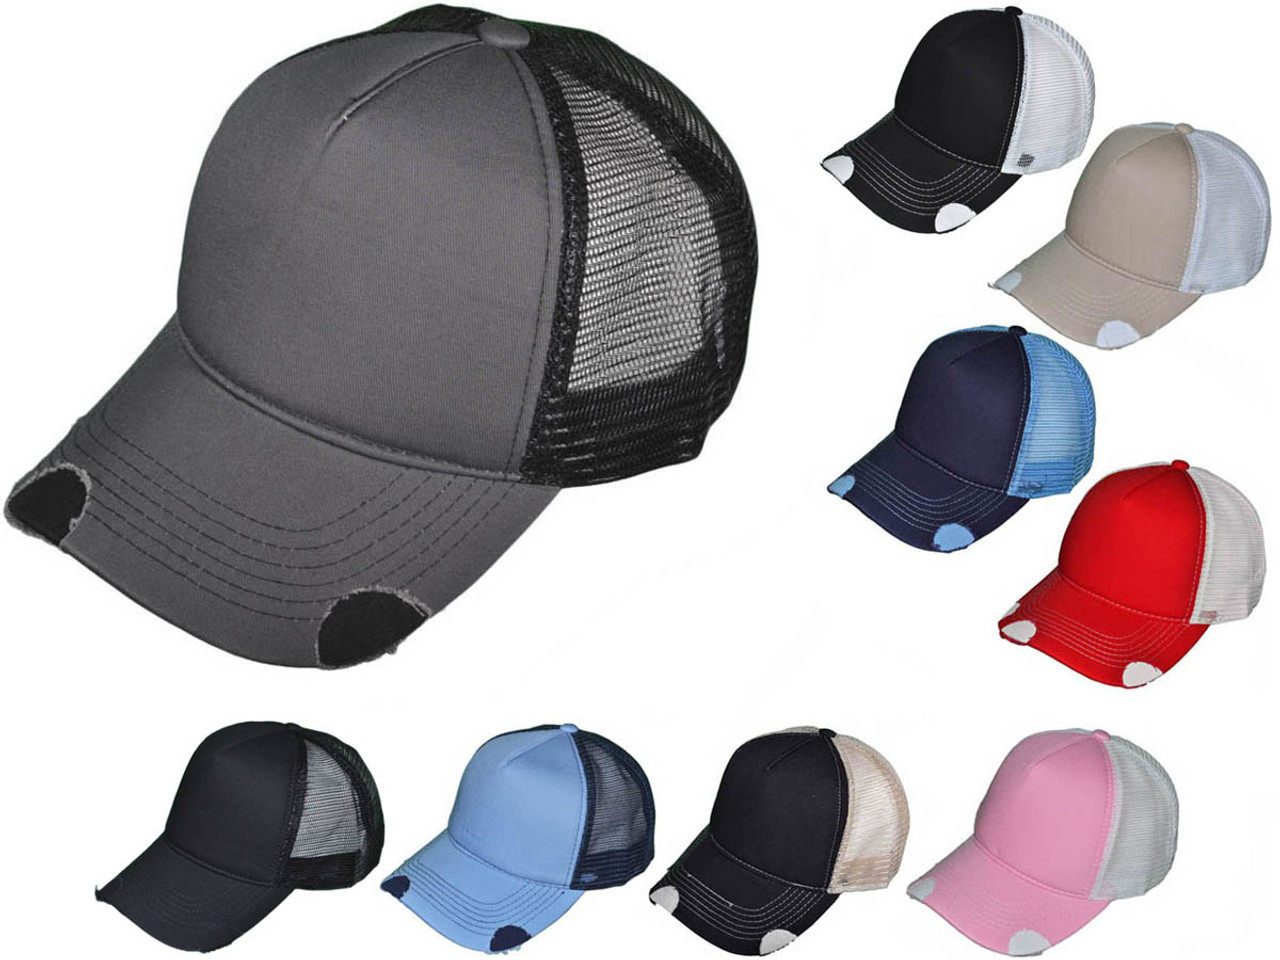 Herformuleren Snel Boos worden Wholesale BK Caps Distressed Cotton Twill/Mesh Trucker Hats (Black/Khaki)